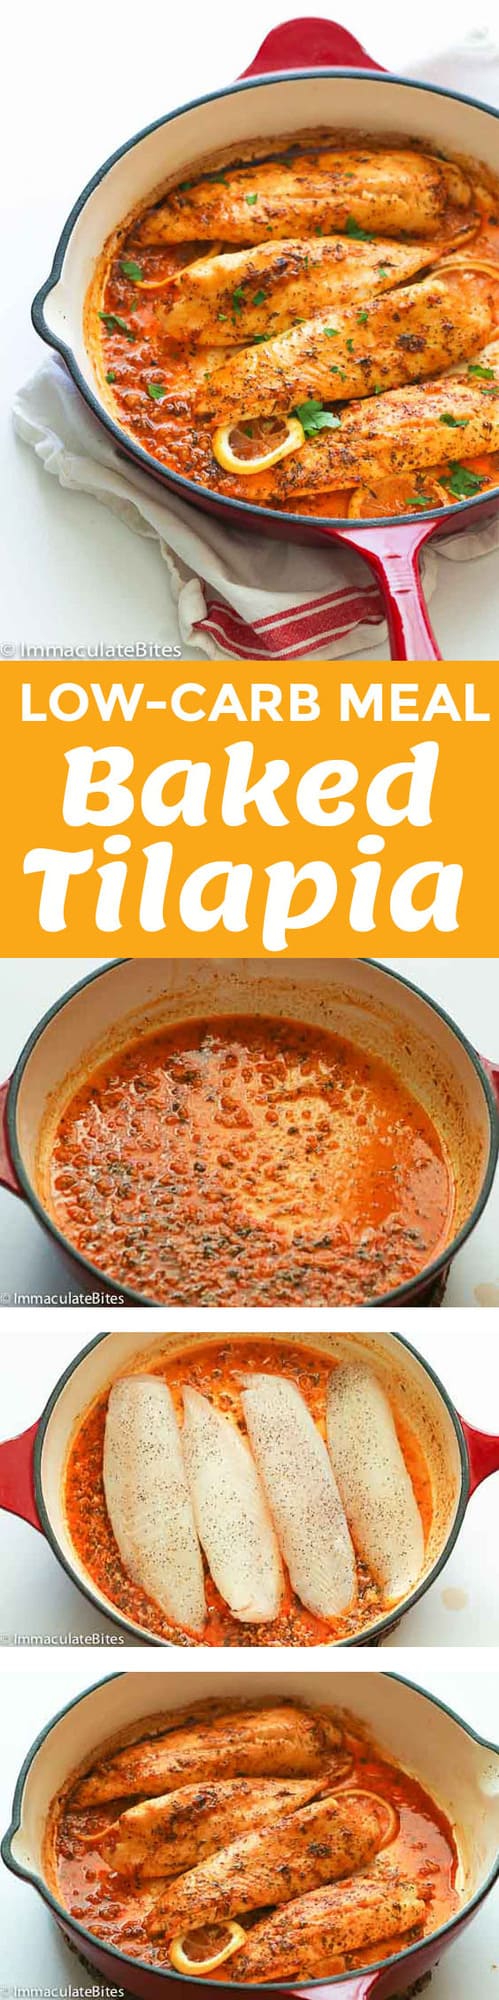 Baked Tilapia